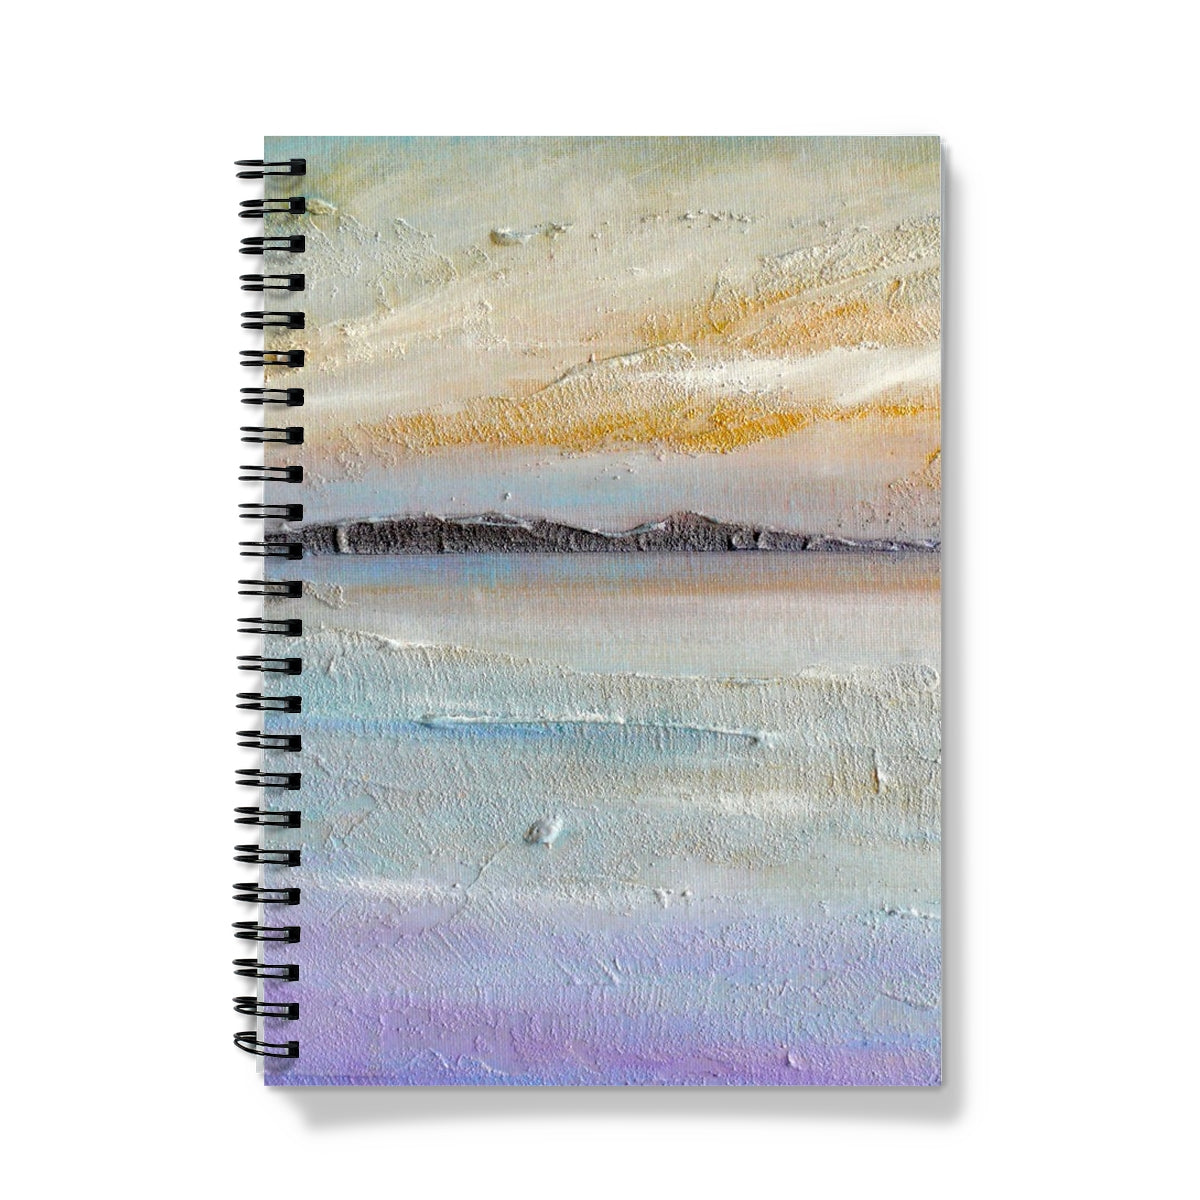 Sollas Beach South Uist Art Gifts Notebook-Journals & Notebooks-Hebridean Islands Art Gallery-A5-Graph-Paintings, Prints, Homeware, Art Gifts From Scotland By Scottish Artist Kevin Hunter